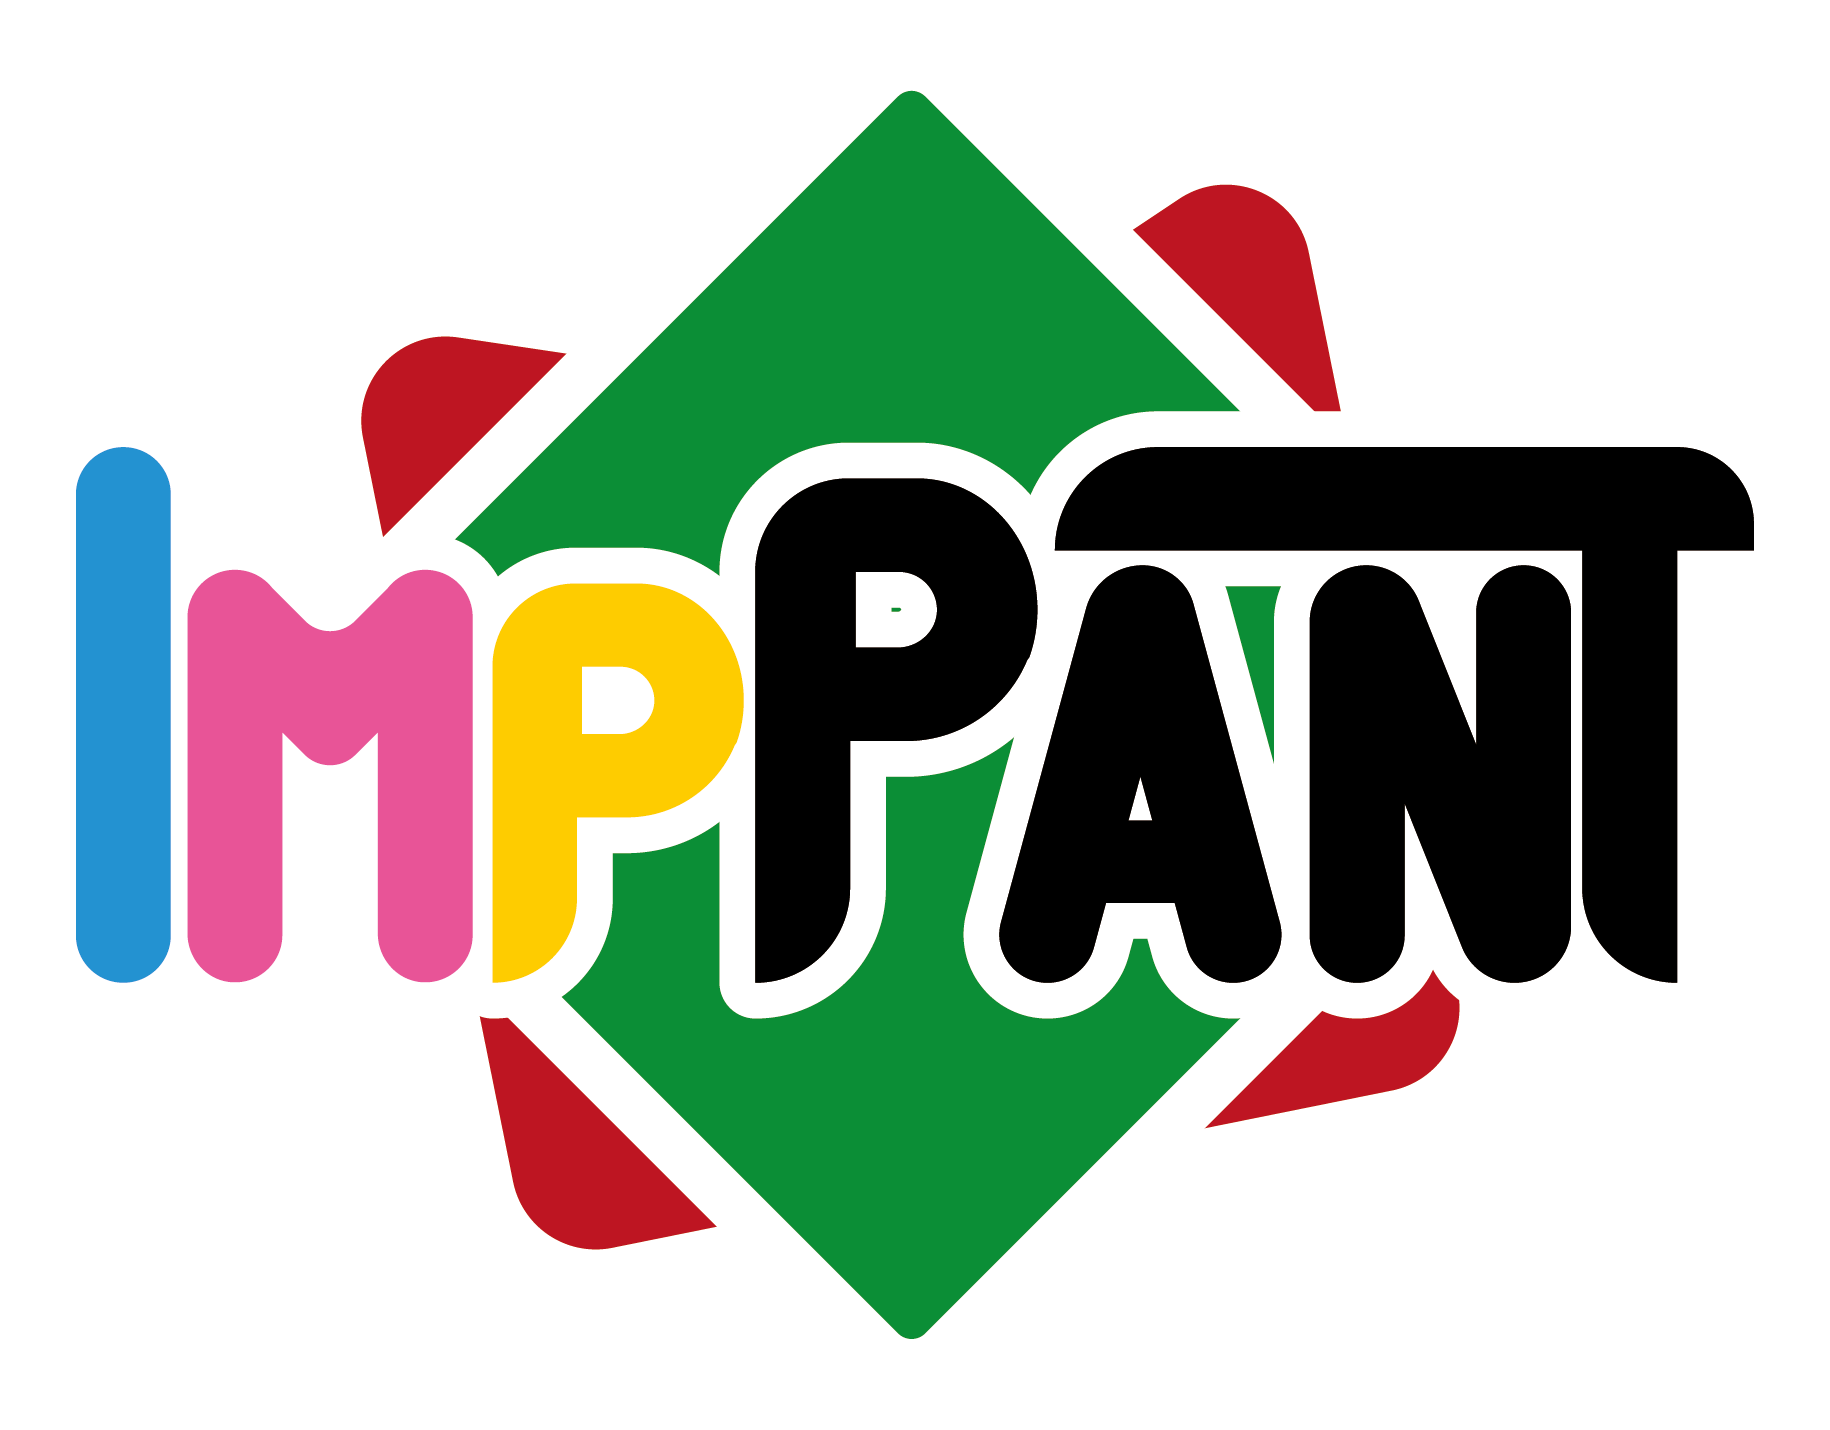 ImpPant